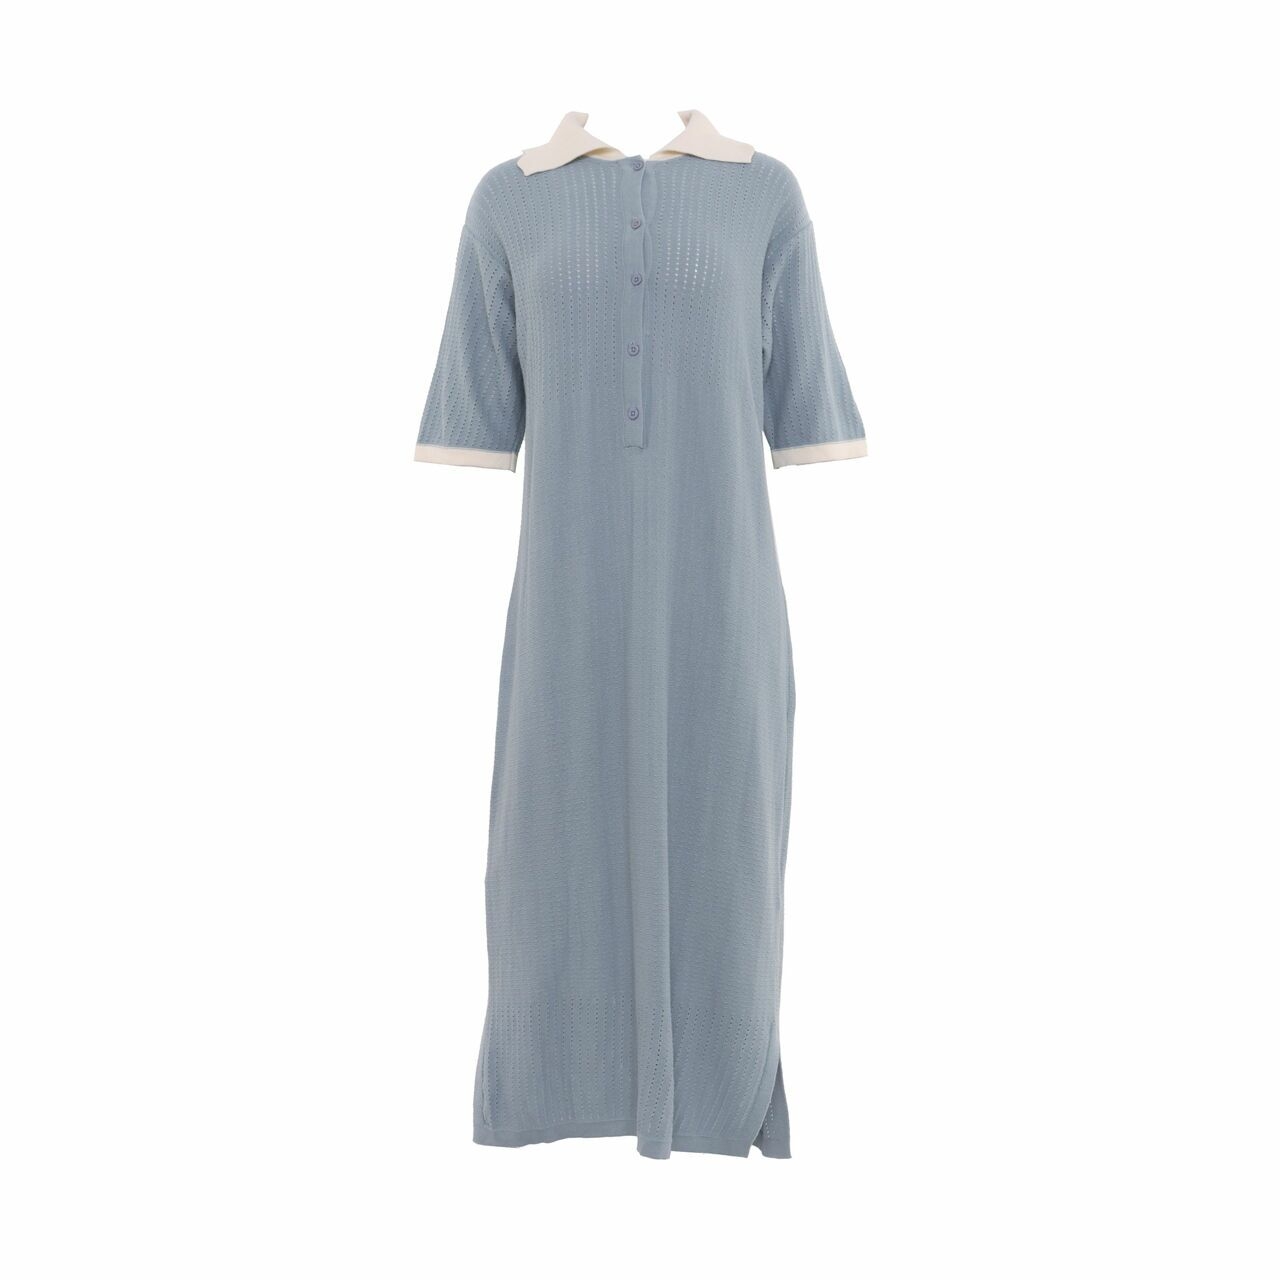 Jii by Gloria Agatha Blue Knit Midi Dress